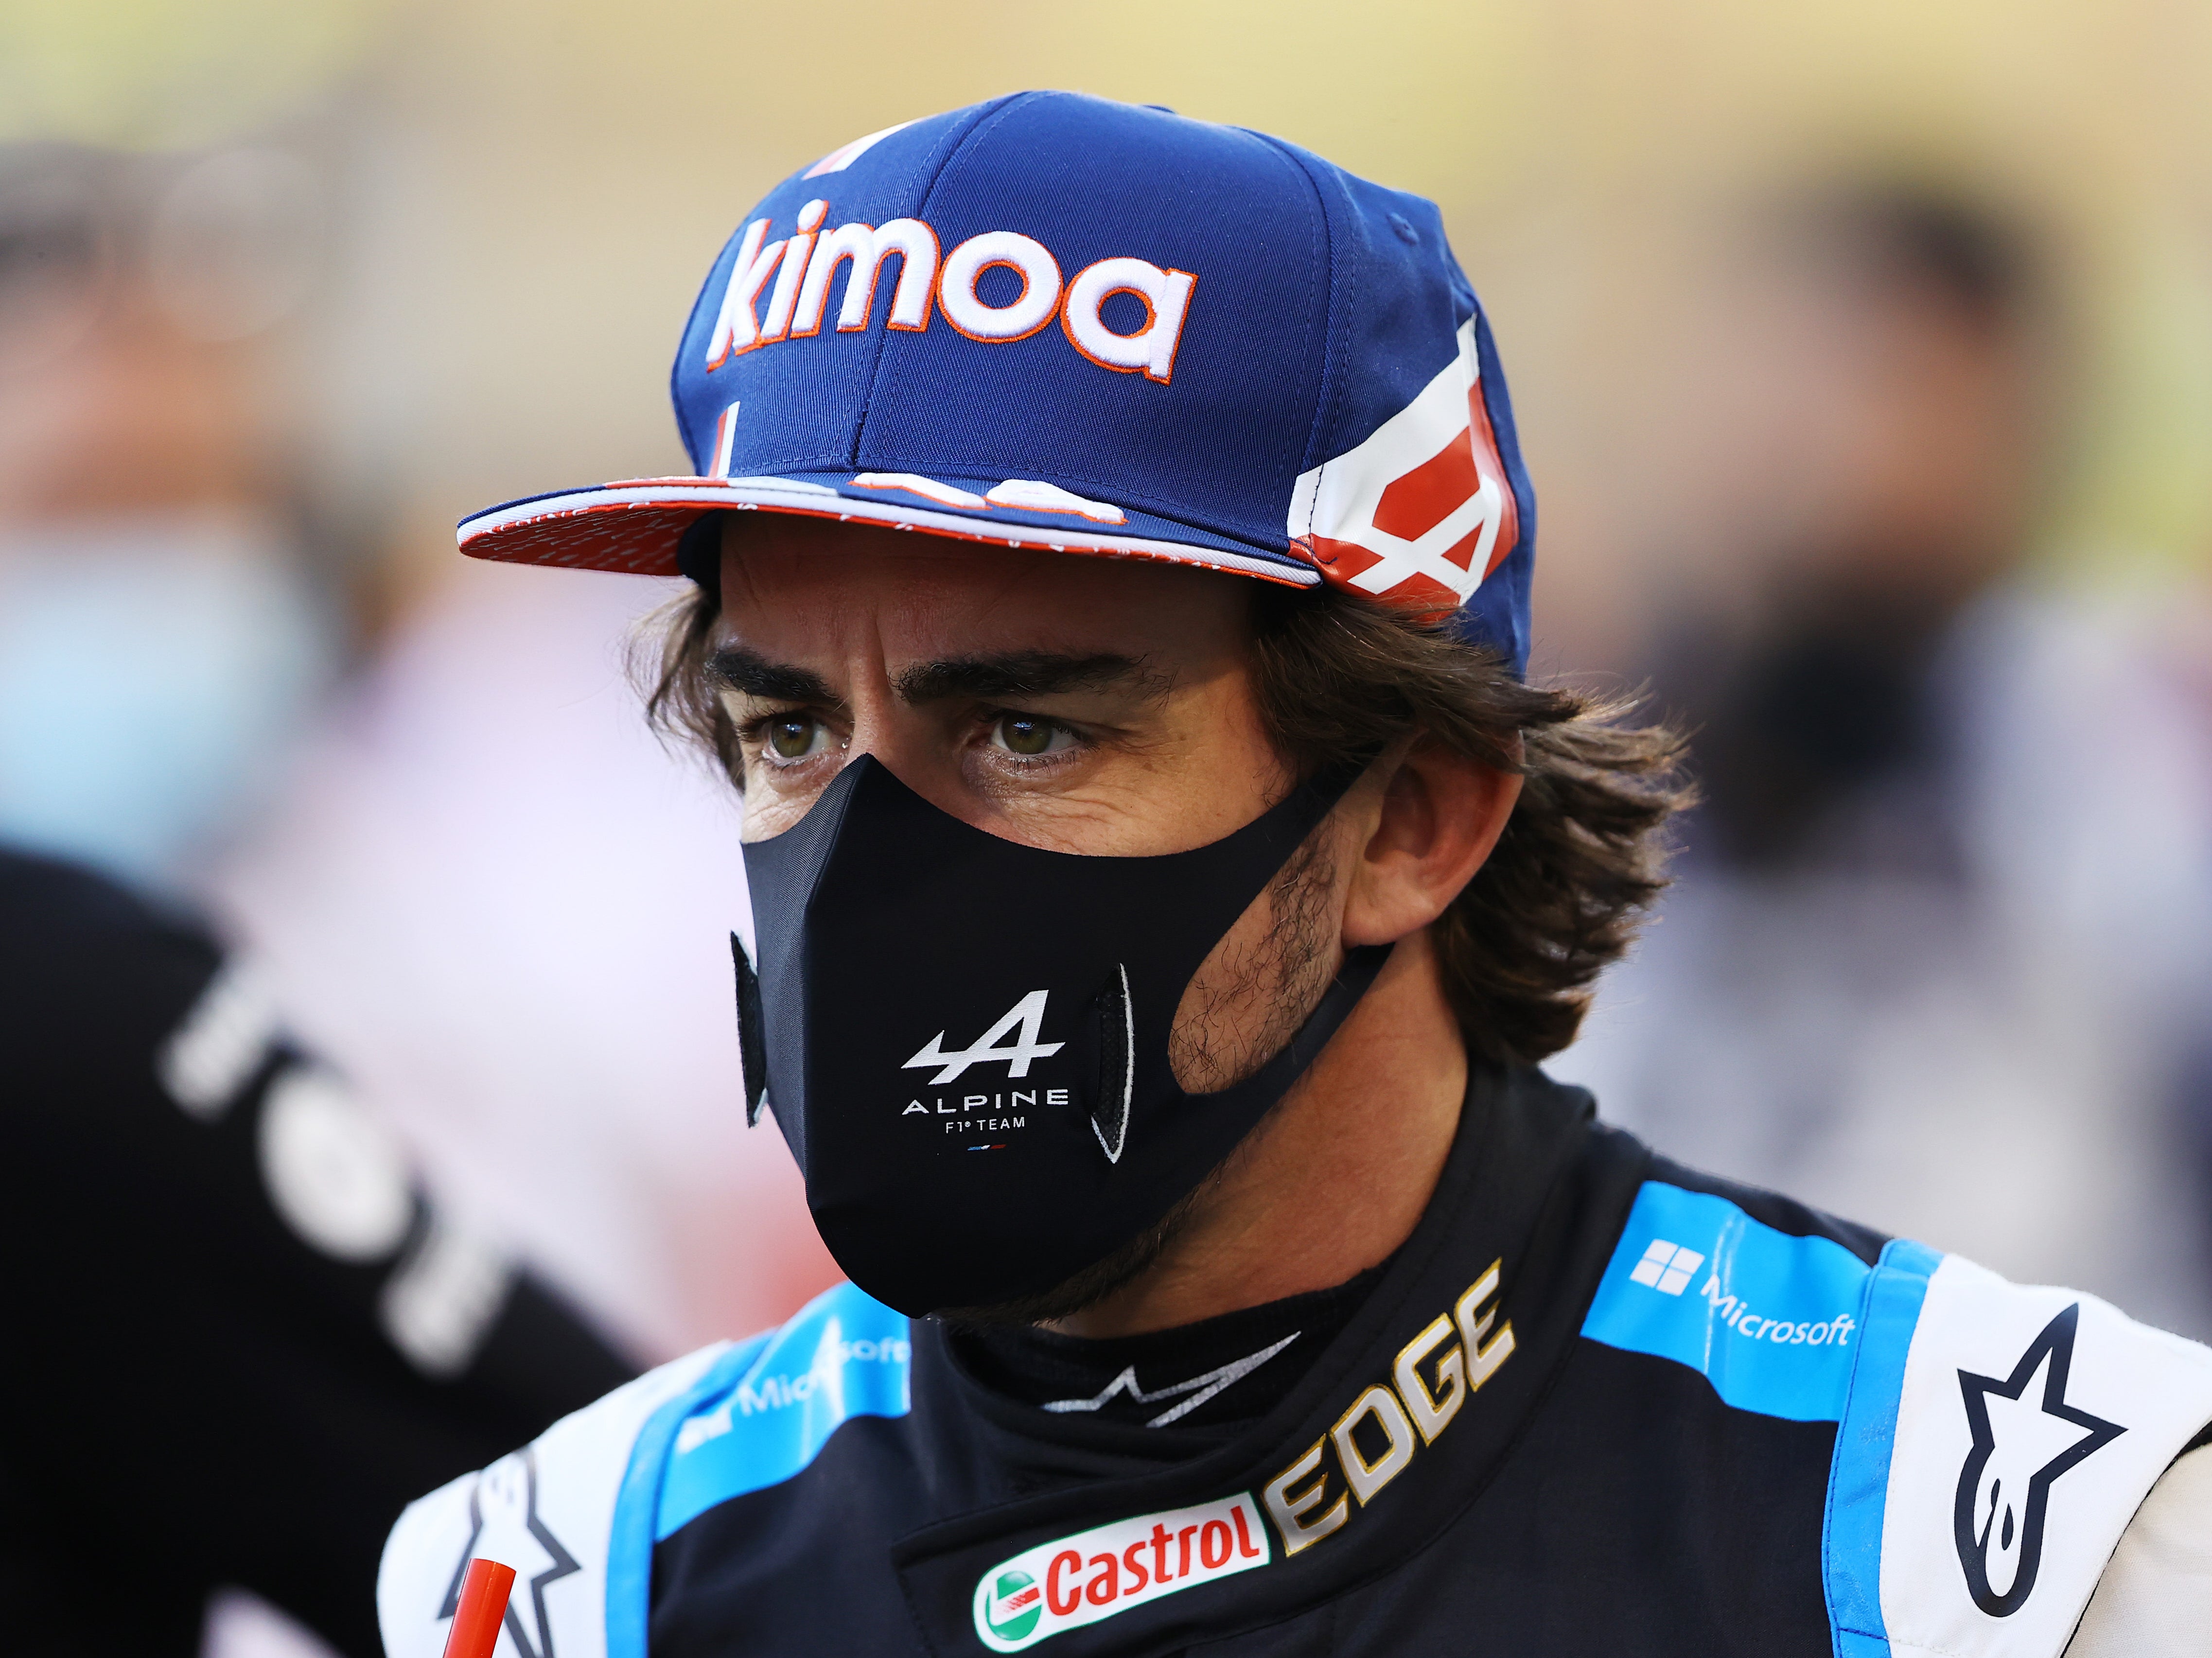 Fernando Alonso is returning to Formula 1